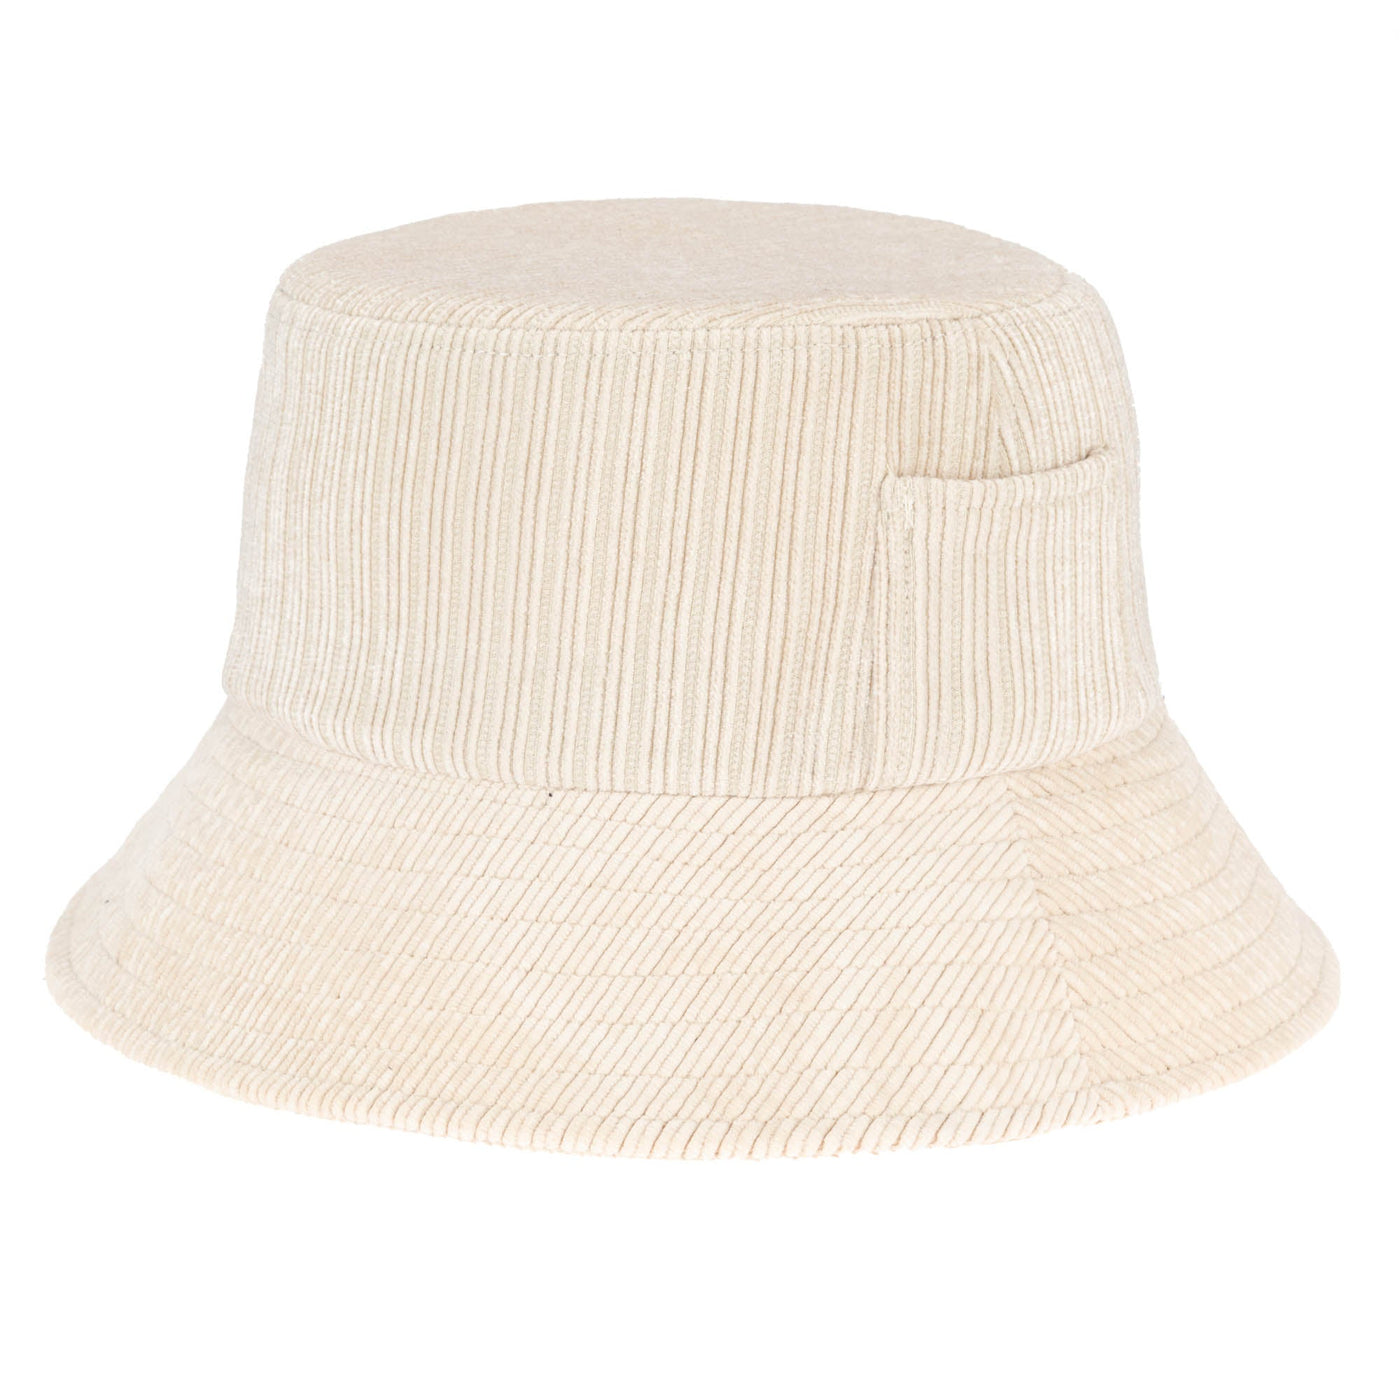 BUCKET - Cozy And Chic Bucket Hat